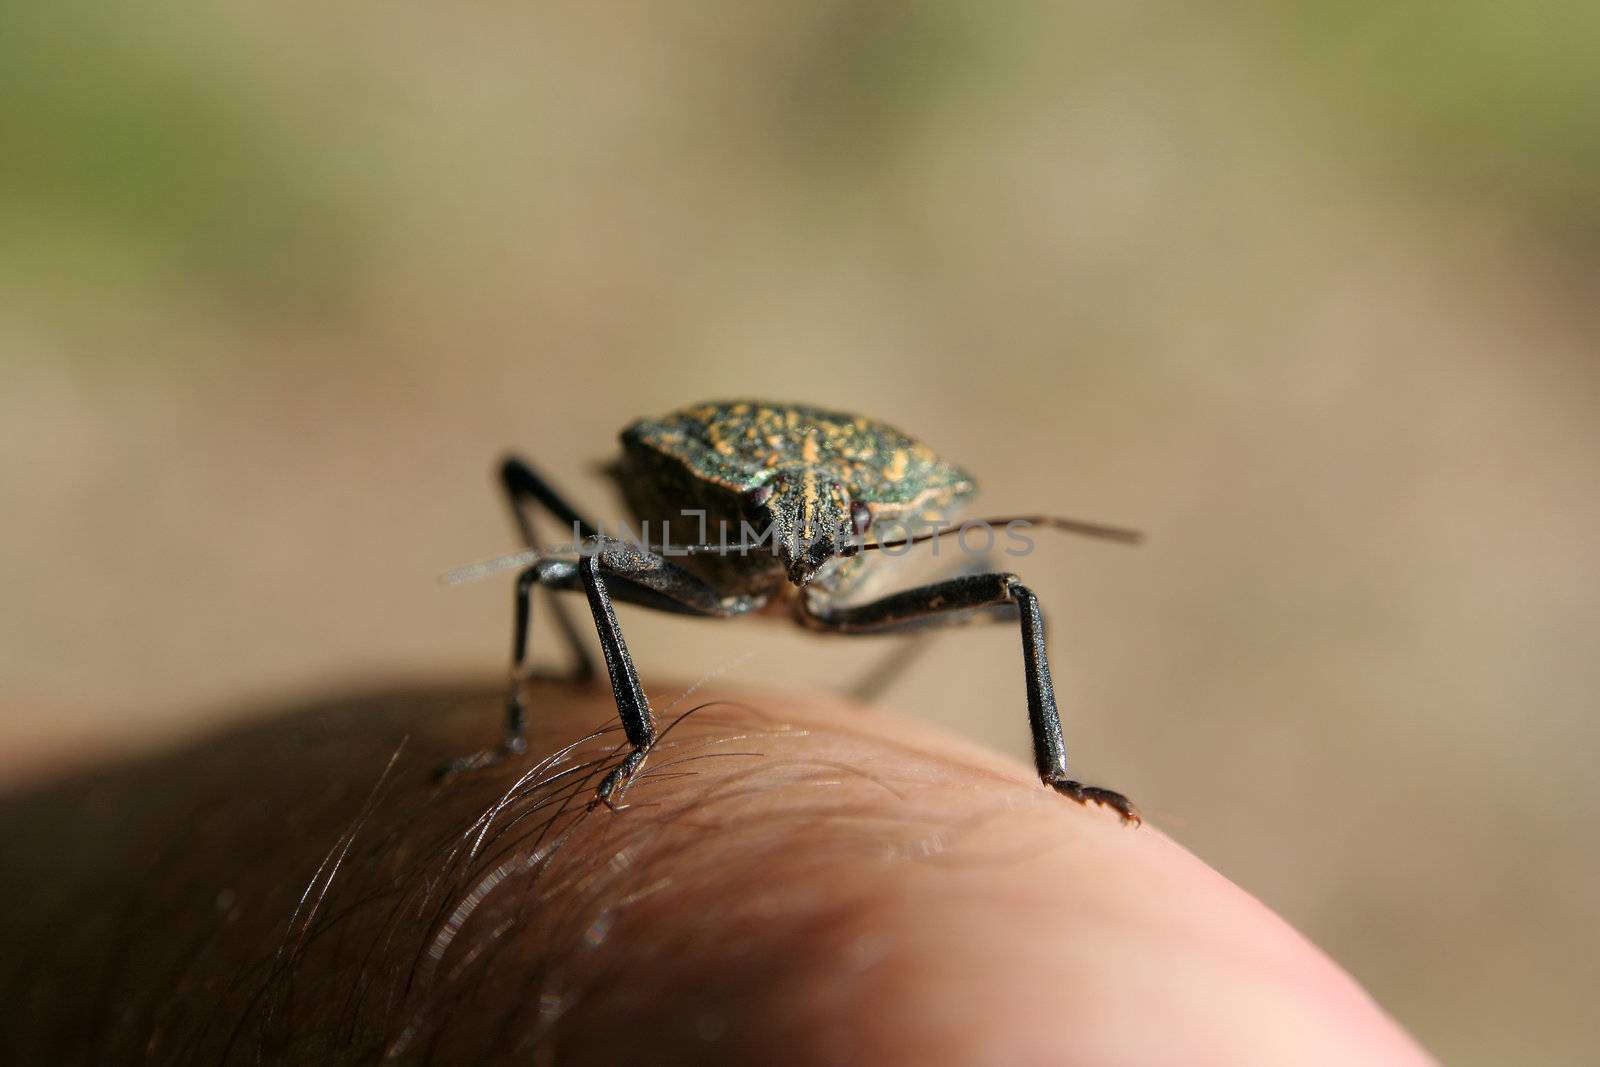 a bug walking on hand